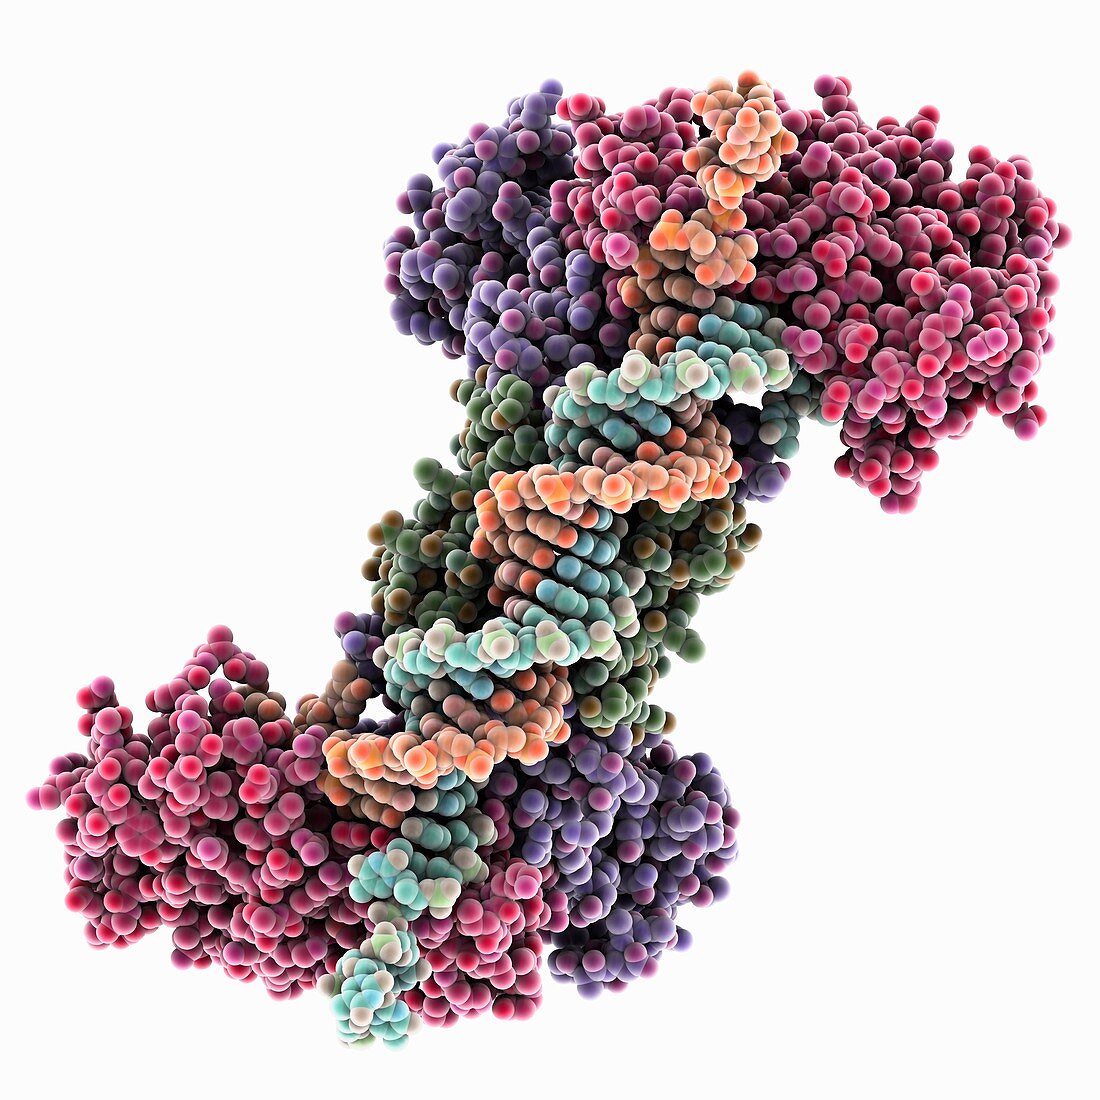 CRISPR endonuclease DNA complex